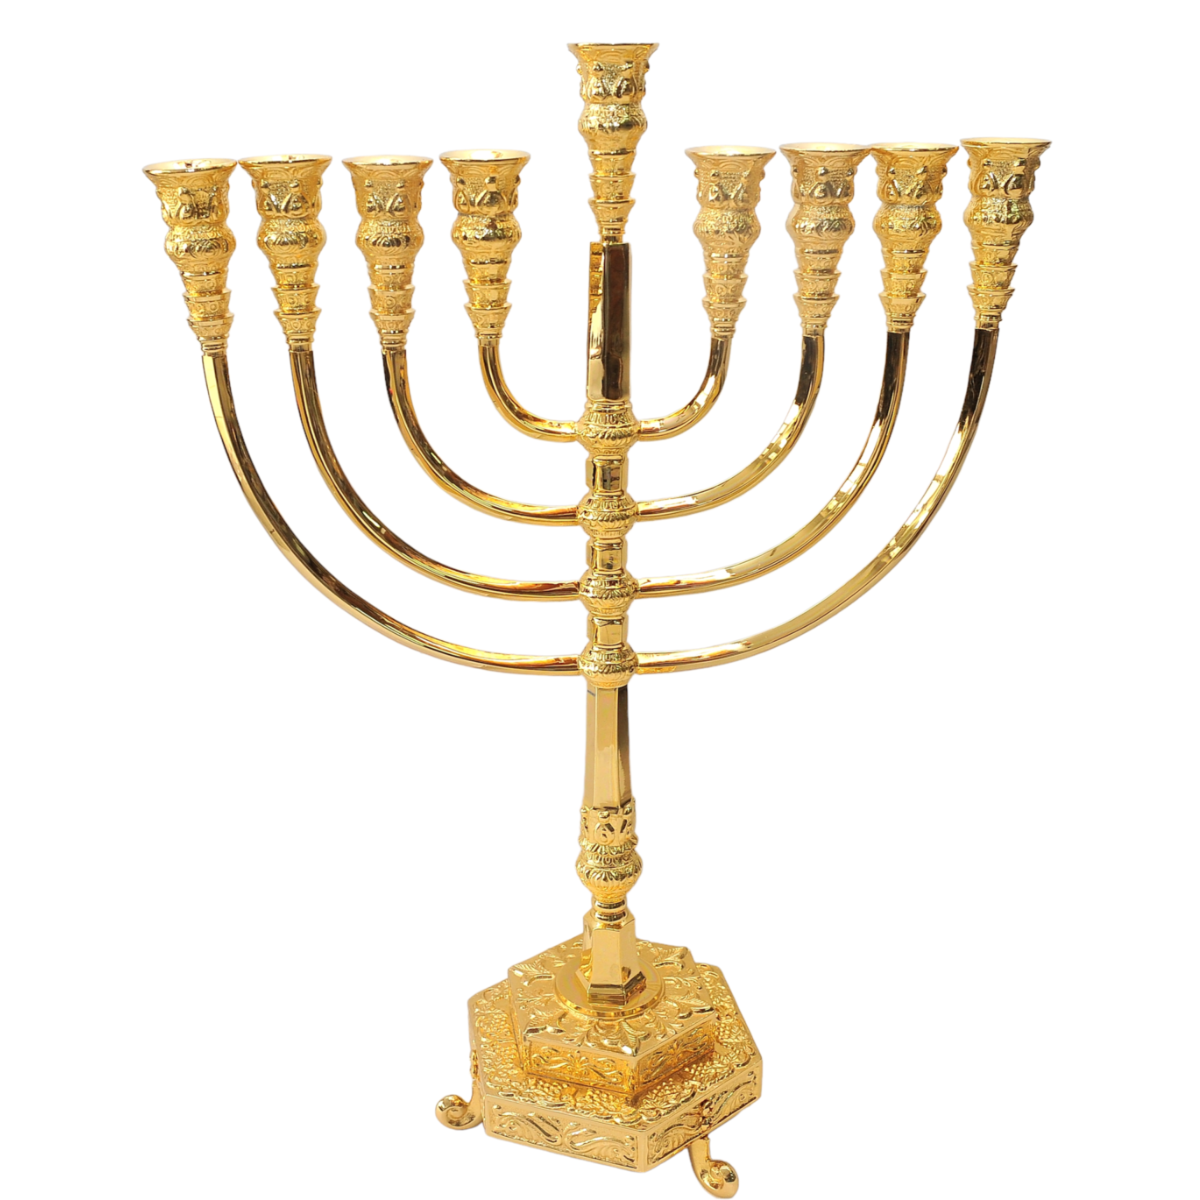 Very Big & High Quality Menorah Hanukkah Gold Plated From Jerusalem